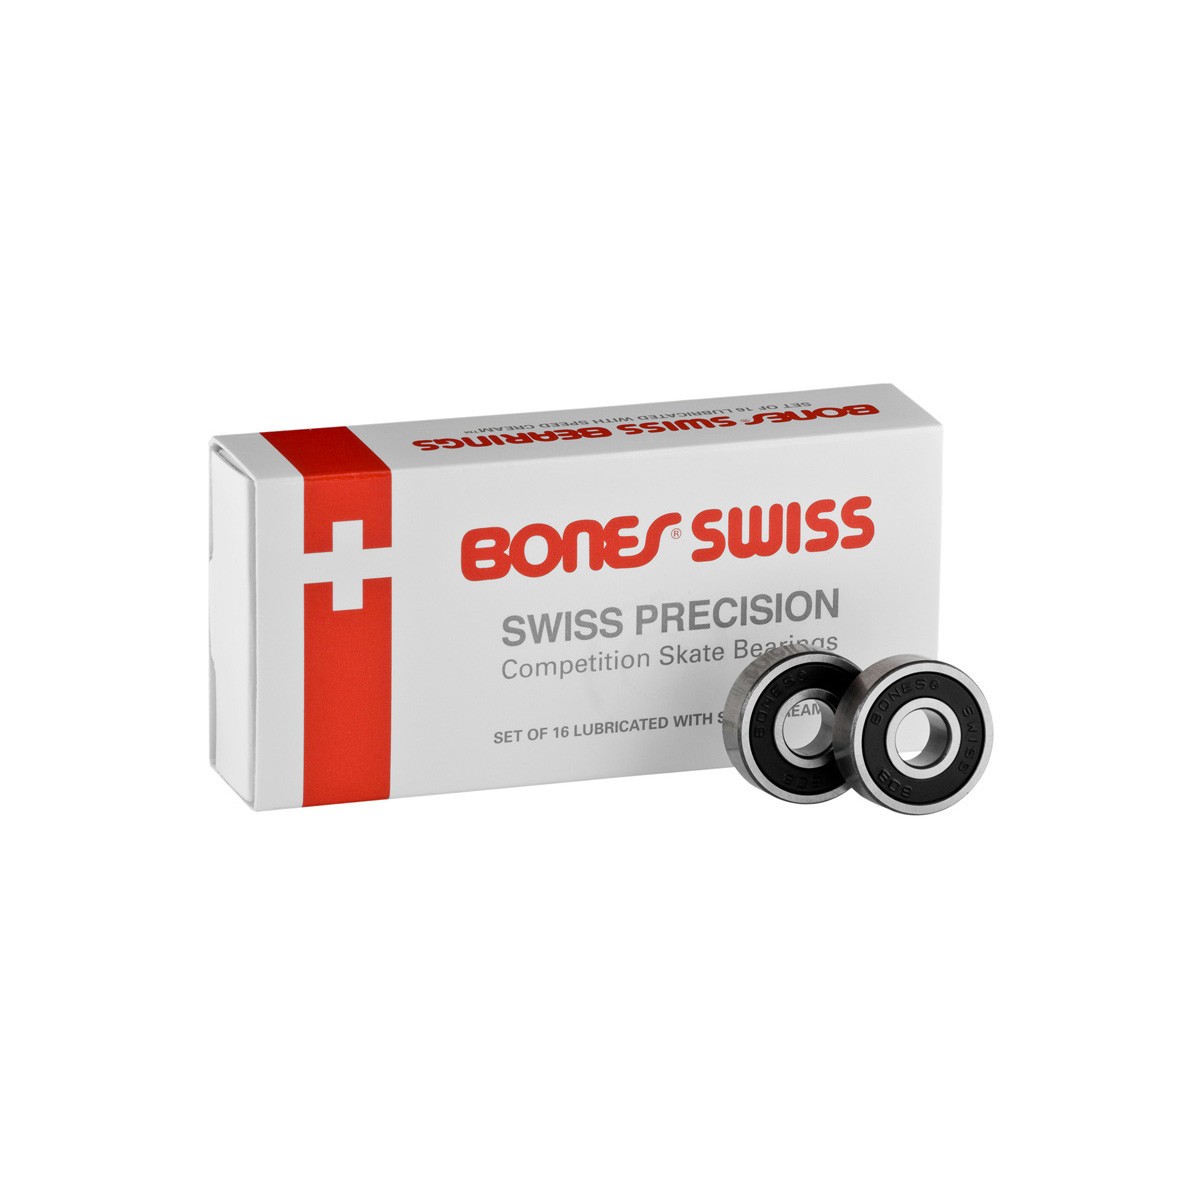 Bones Super Swiss Precision - 16 PK